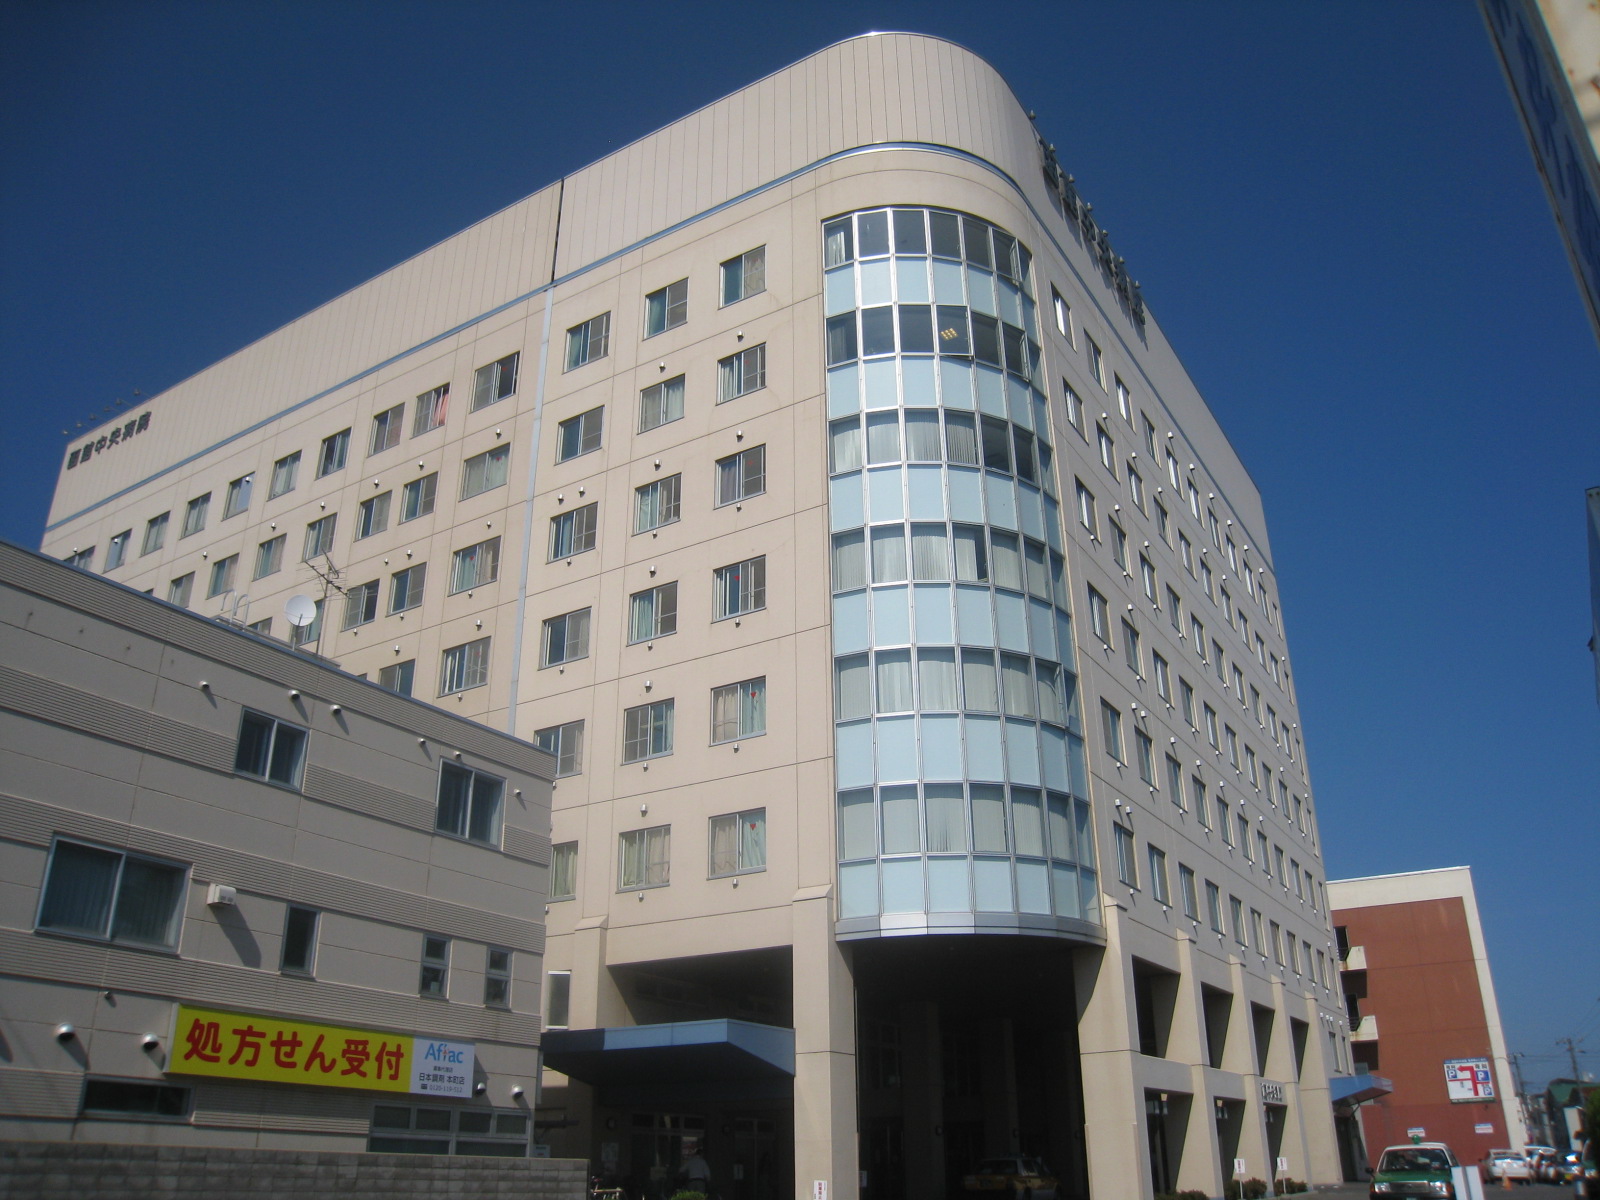 Hospital. Social welfare corporation Hakodate Welfare Institute Hakodate Central Hospital (Hospital) to 951m